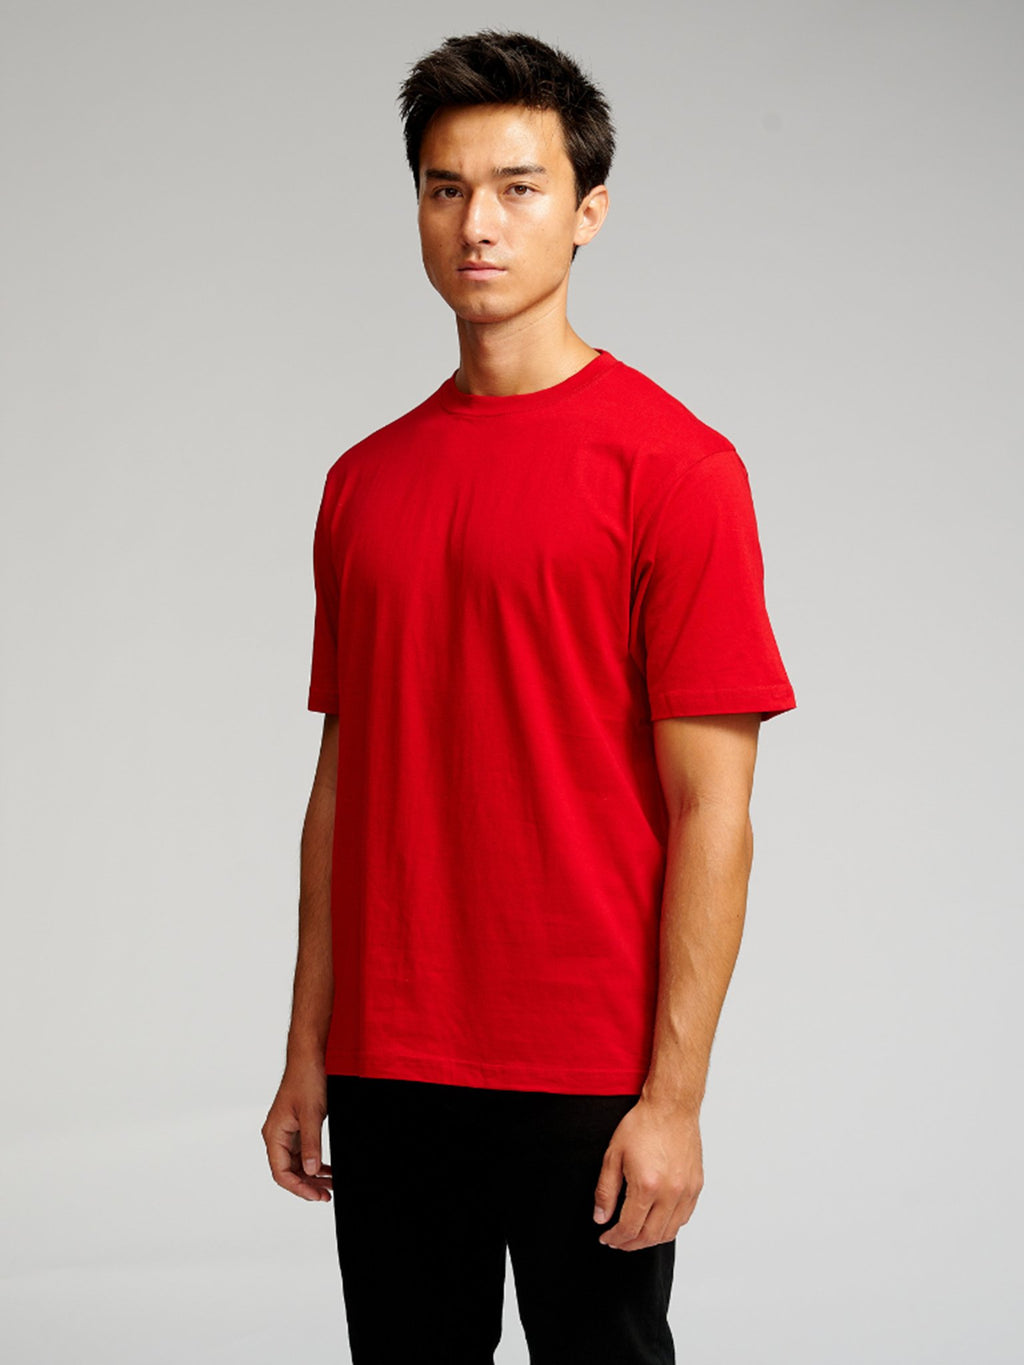 Oversized T-Shirt - Dänemarks Rot